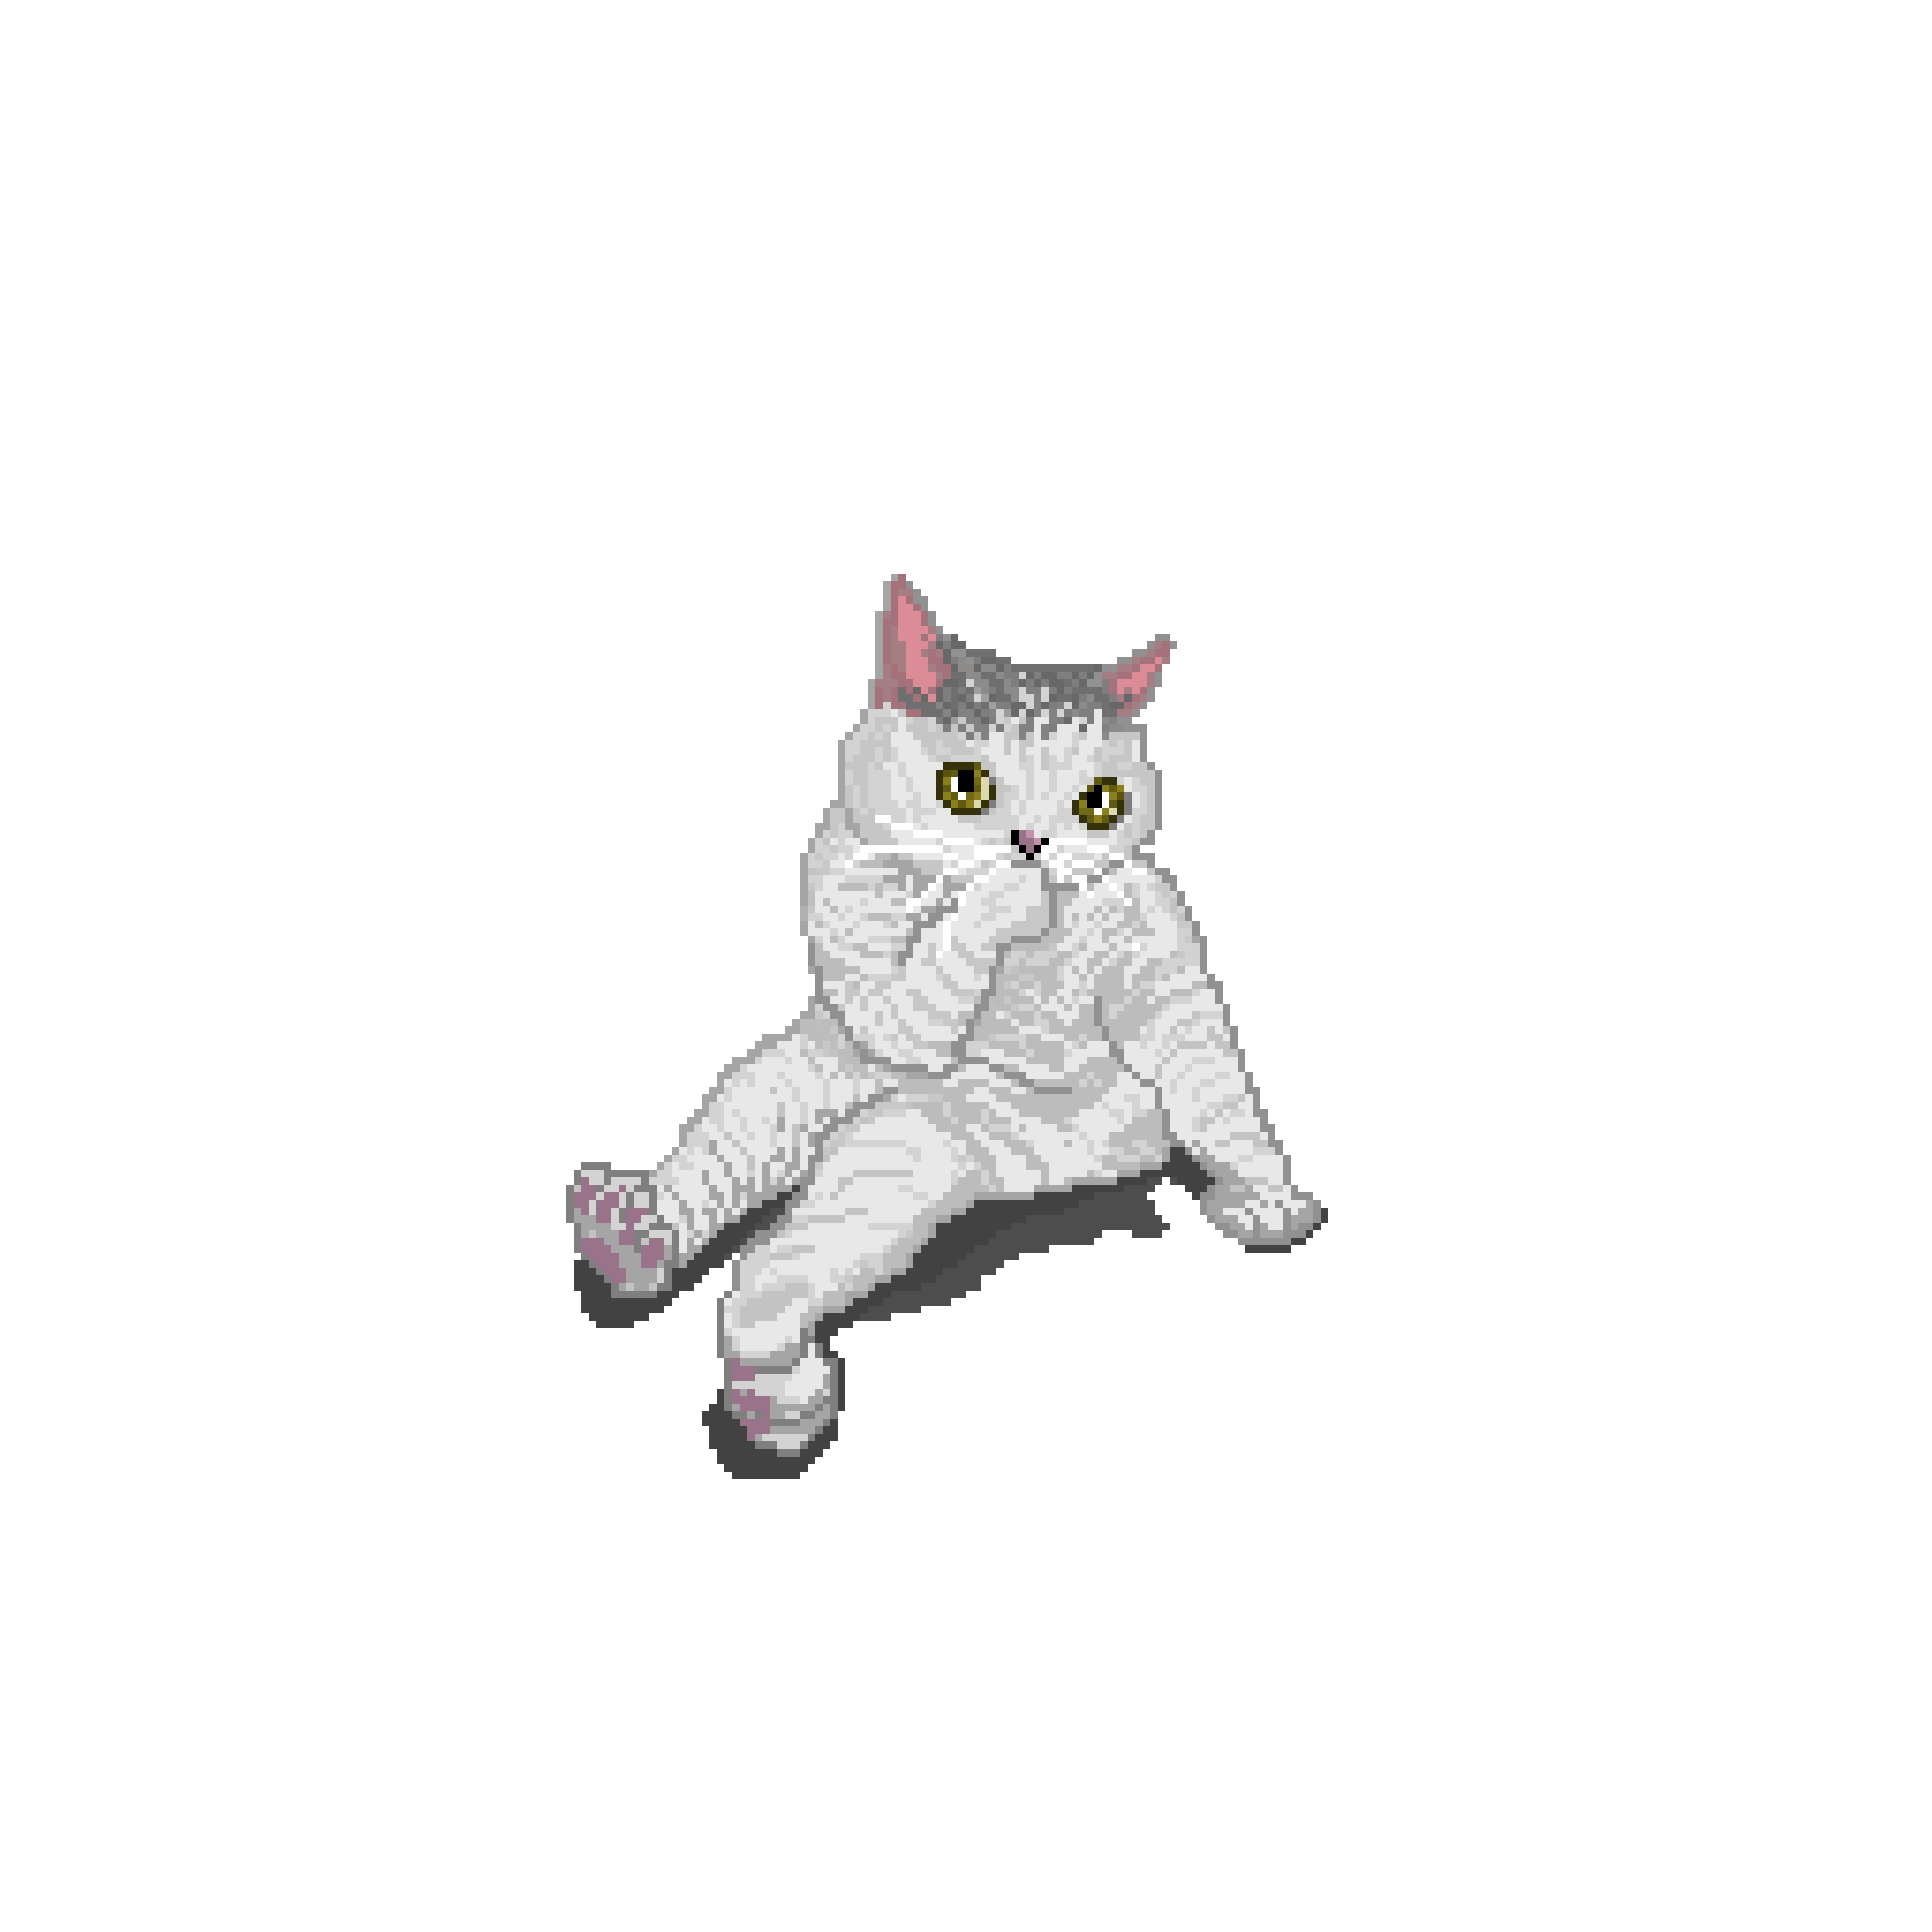 Shy cat by doodga on DeviantArt